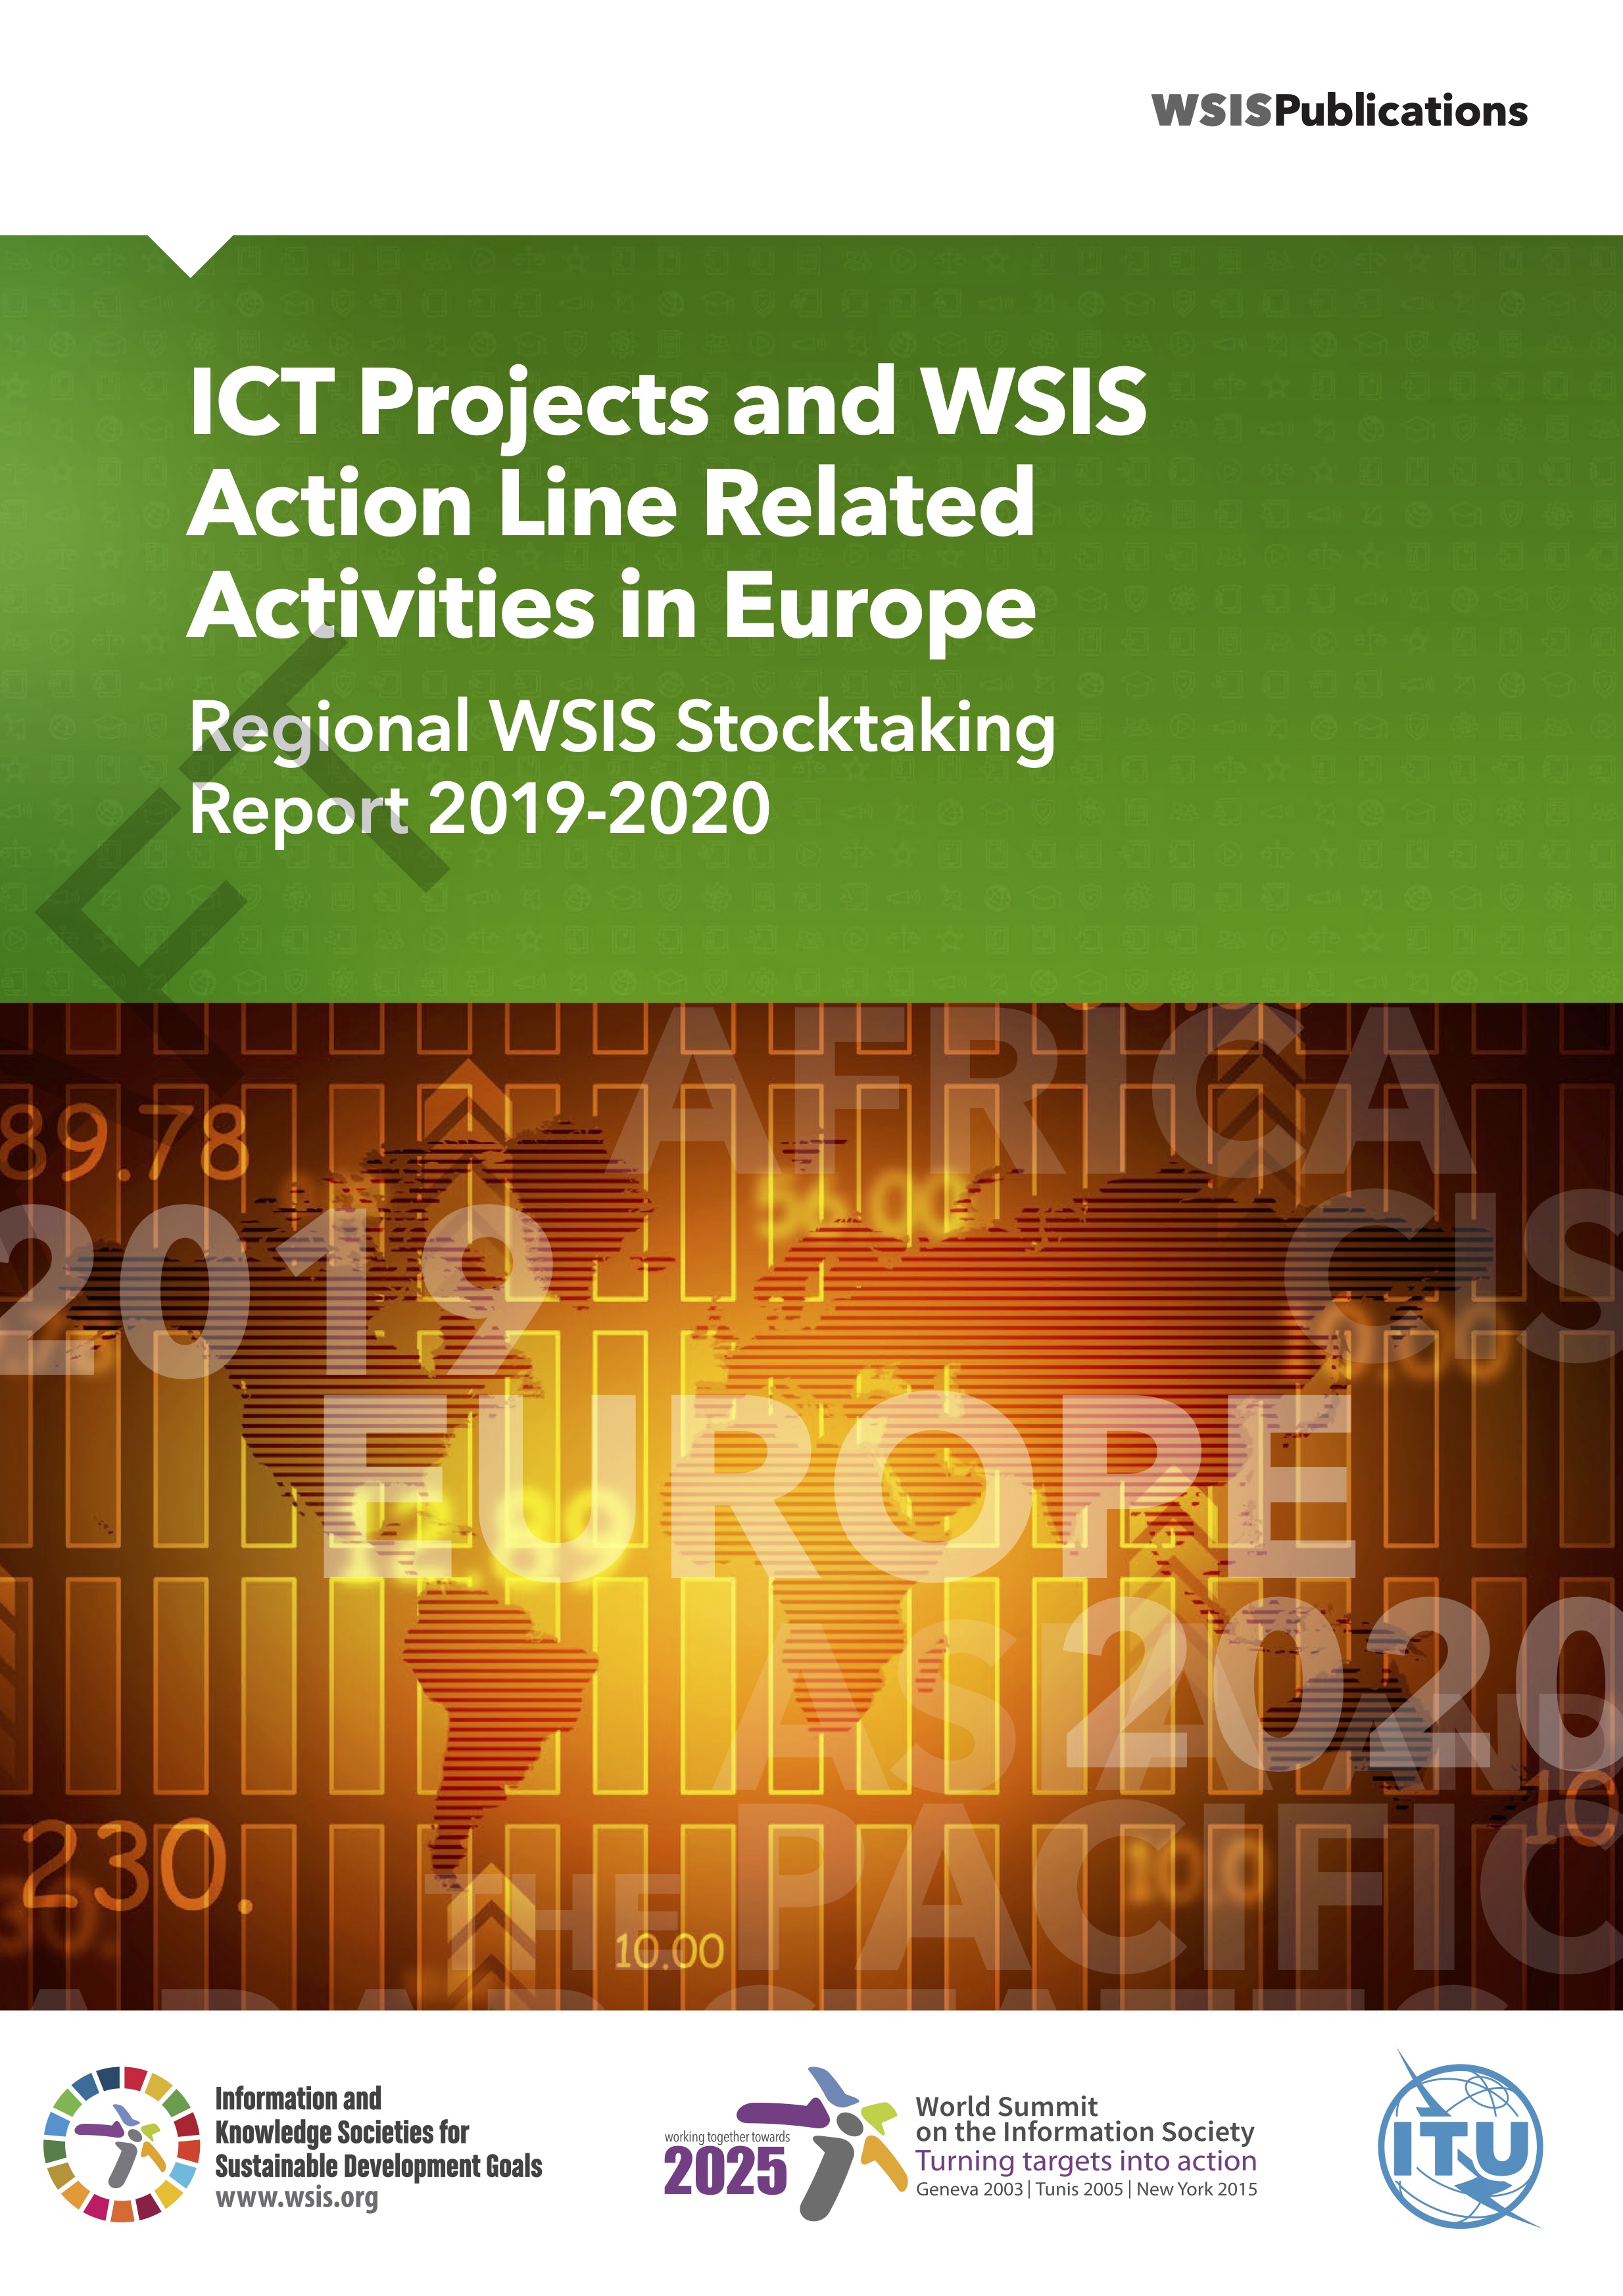 Regional WSIS Stocktaking Report 2019-2020 — Europe